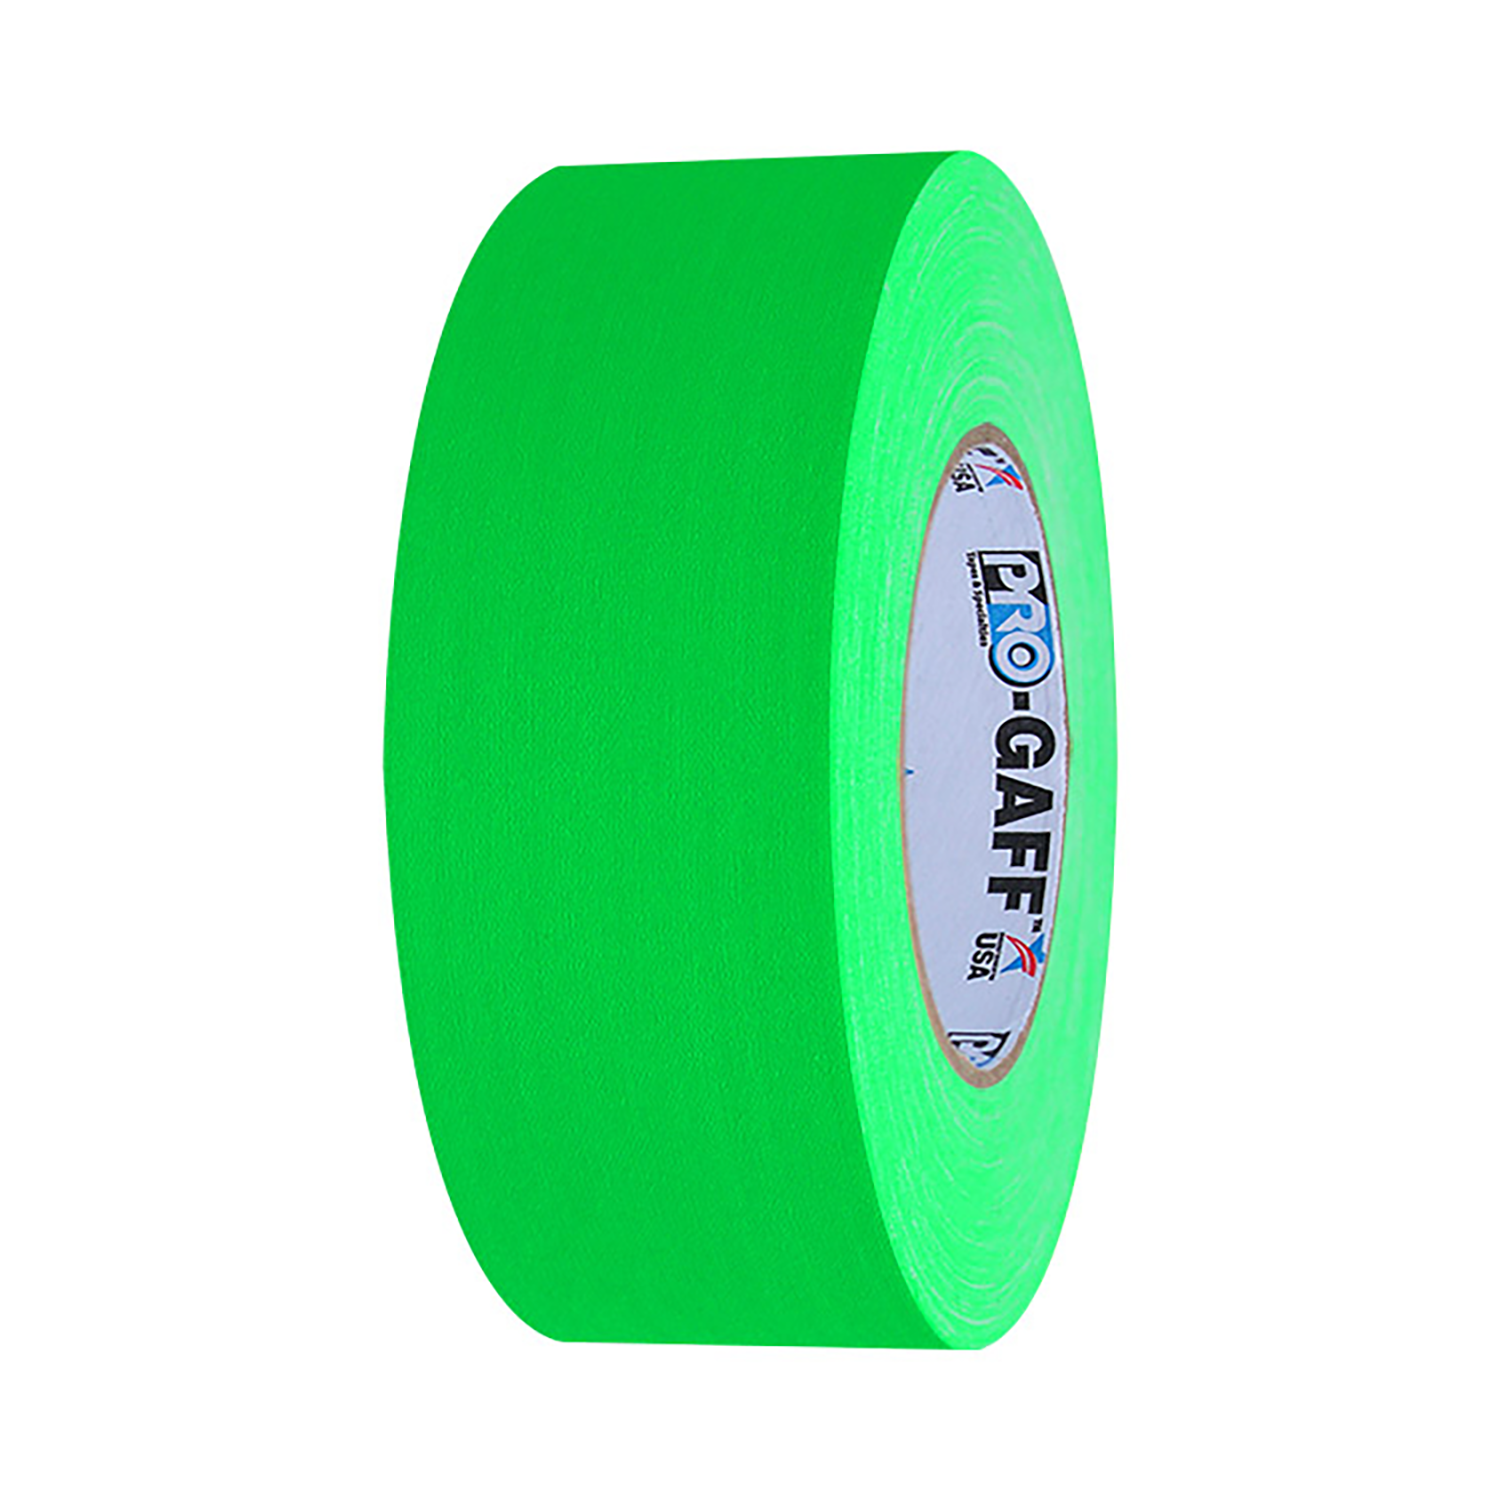 Pro Tapon de bande pro-gaff vert fluorescent 50 yards 1 "